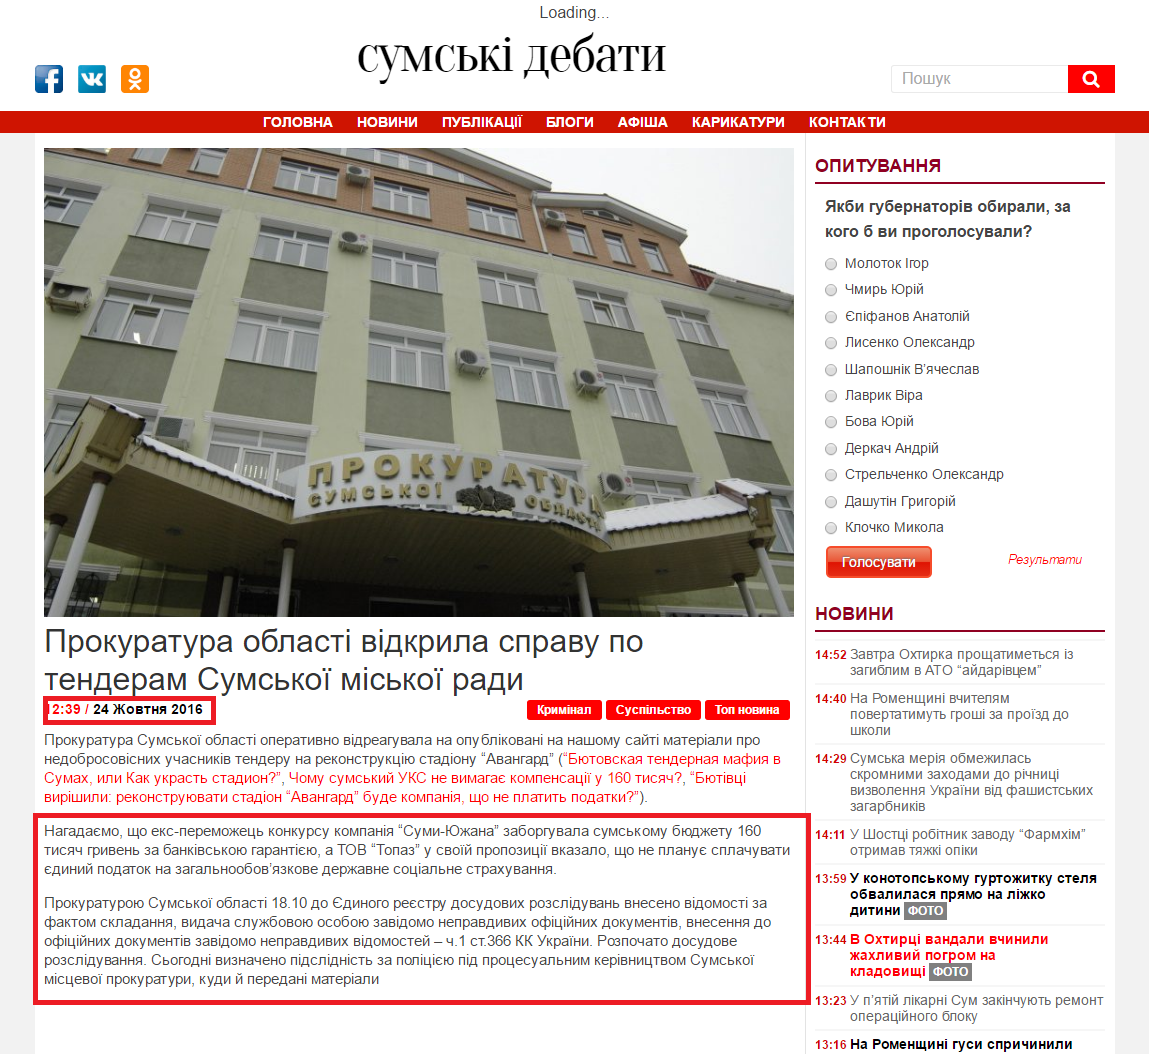 http://debaty.sumy.ua/news/society/prokuratura-oblasti-vidkryla-spravu-po-tenderam-sumskoyi-miskoyi-rady/